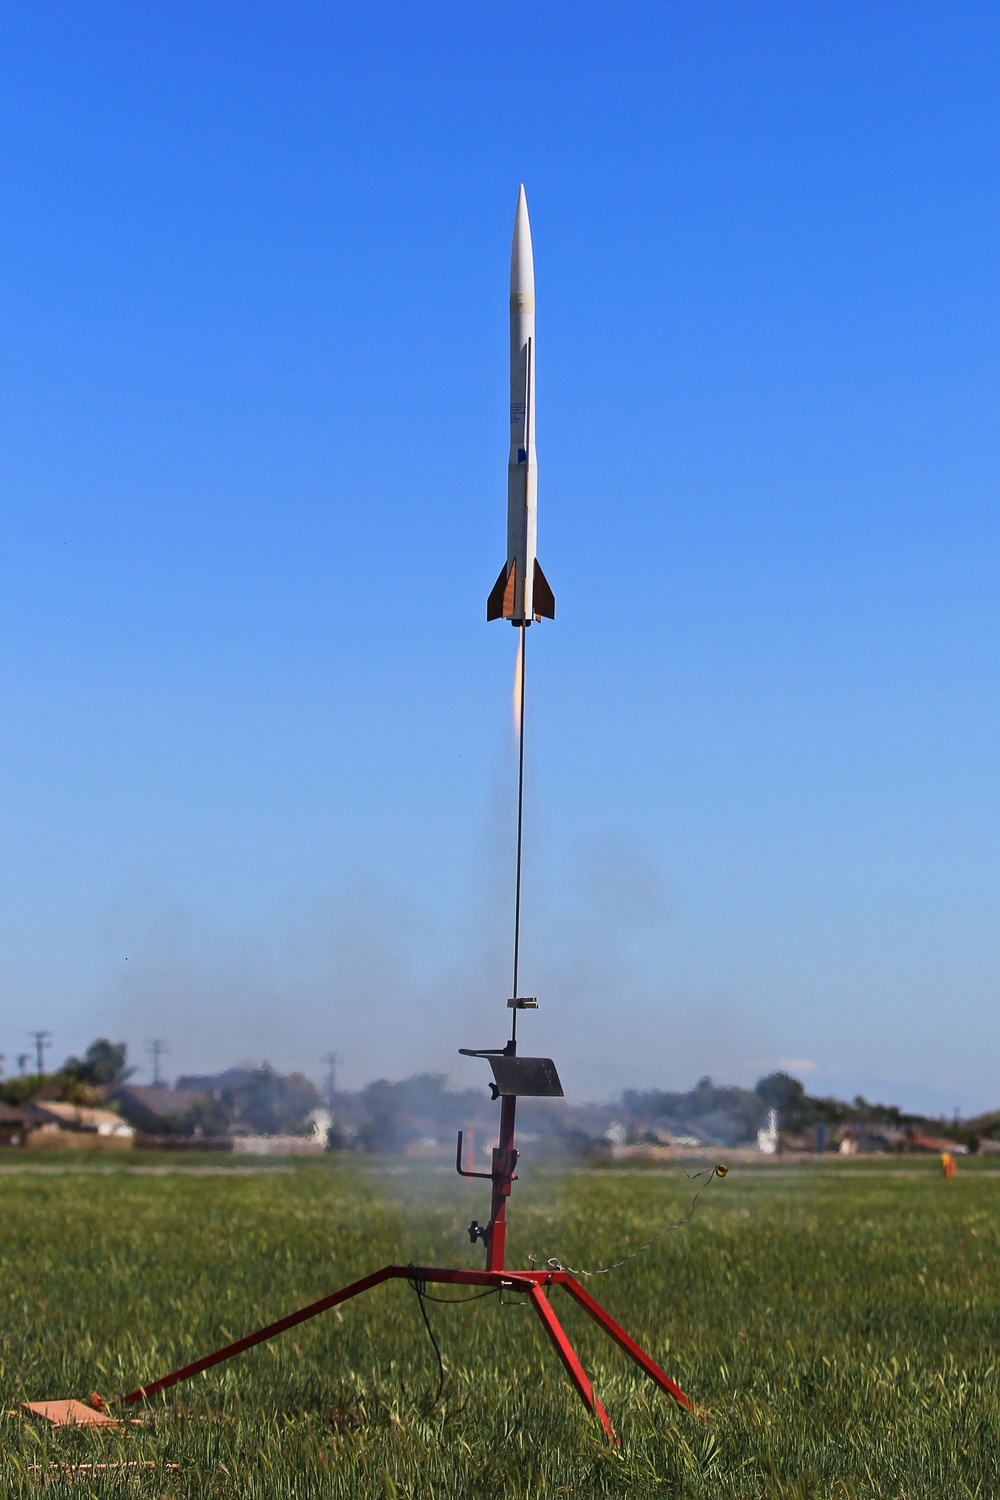 DVIDS - News - STARBASE Los Alamitos marks rocketry program milestone